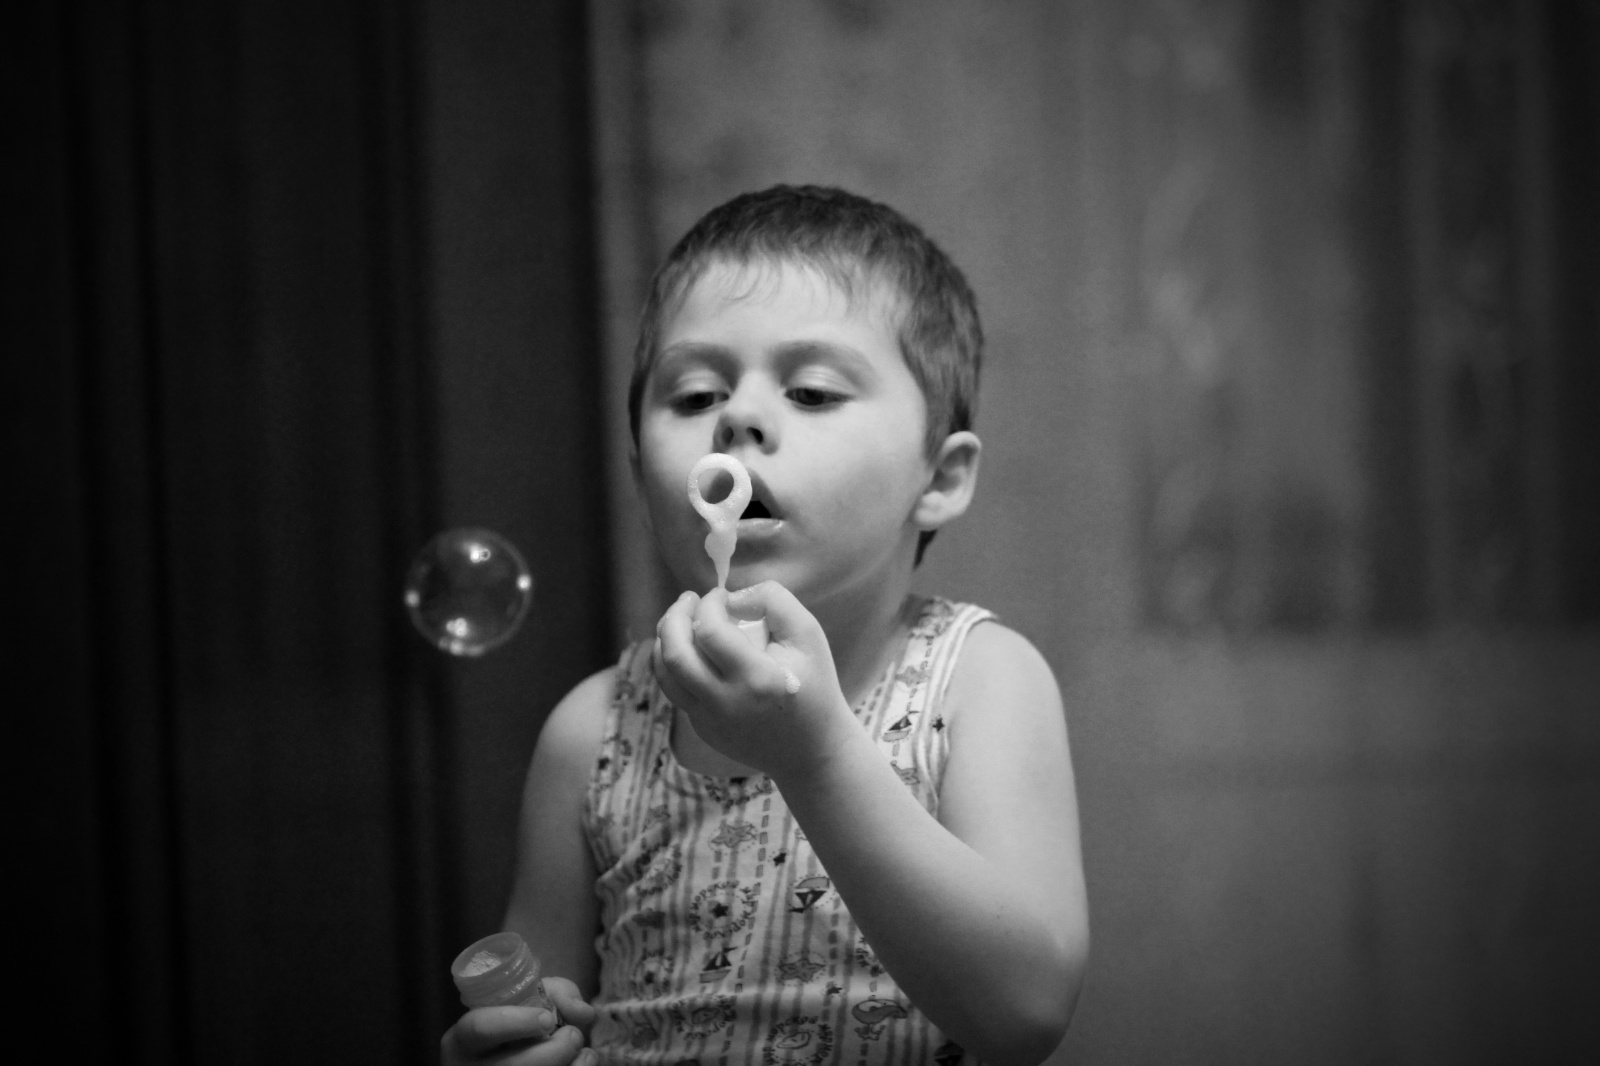 Фотография для критики "детство" | Фотограф Юлия Зубкова | foto.by фото.бай